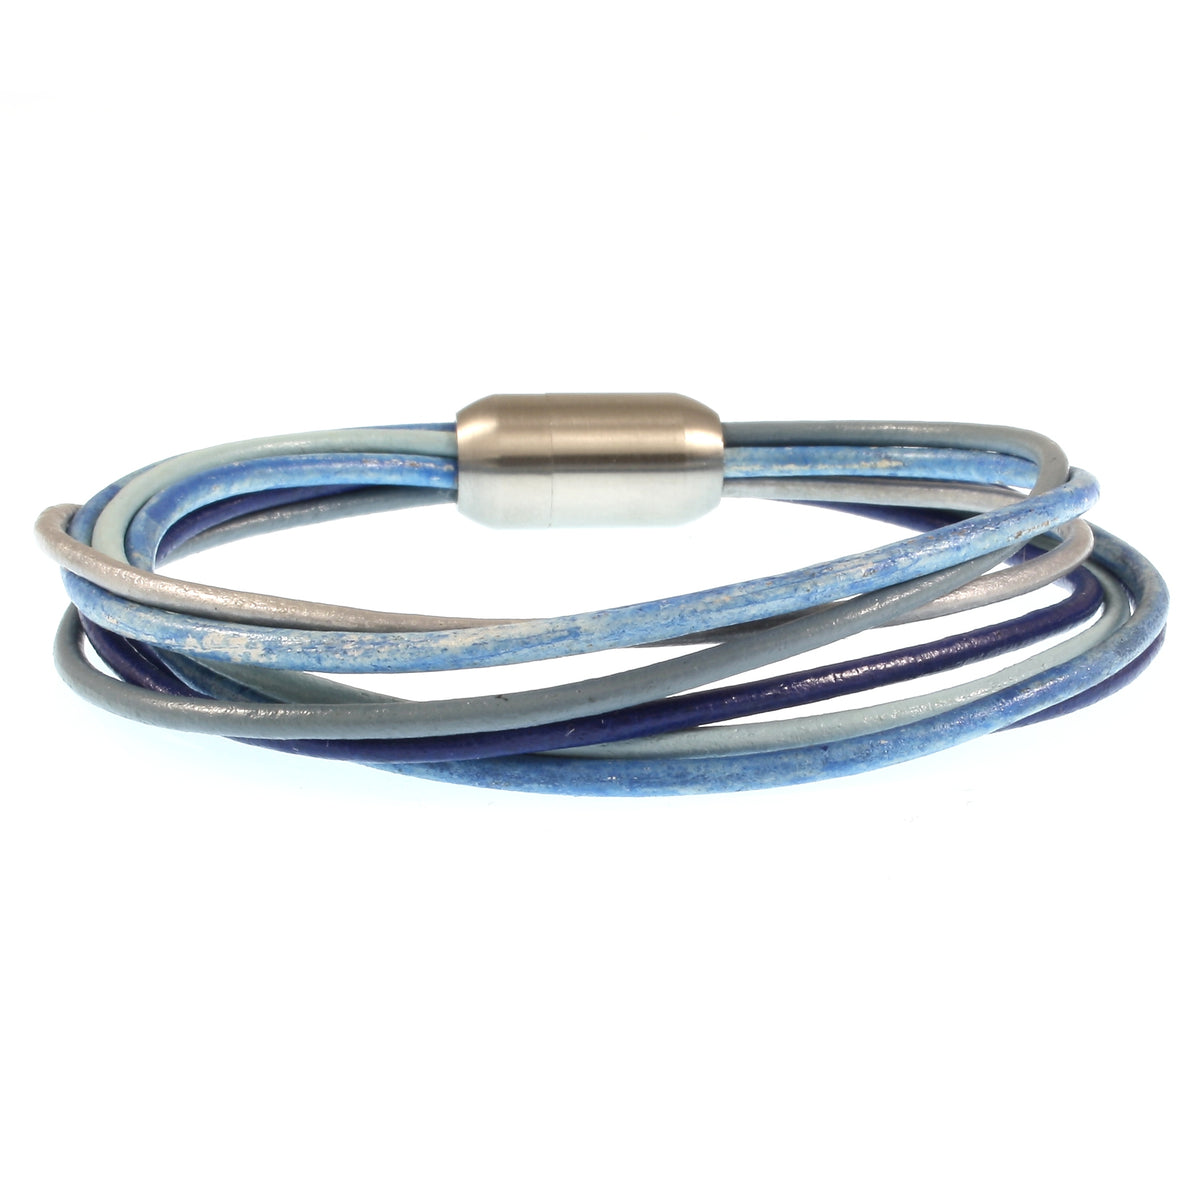 Damen-Leder-armband-fem-ocean-marine-blau-hellblau-multicolor-silber-Edelstahlverschluss-hinten-wavepirate-shop-r